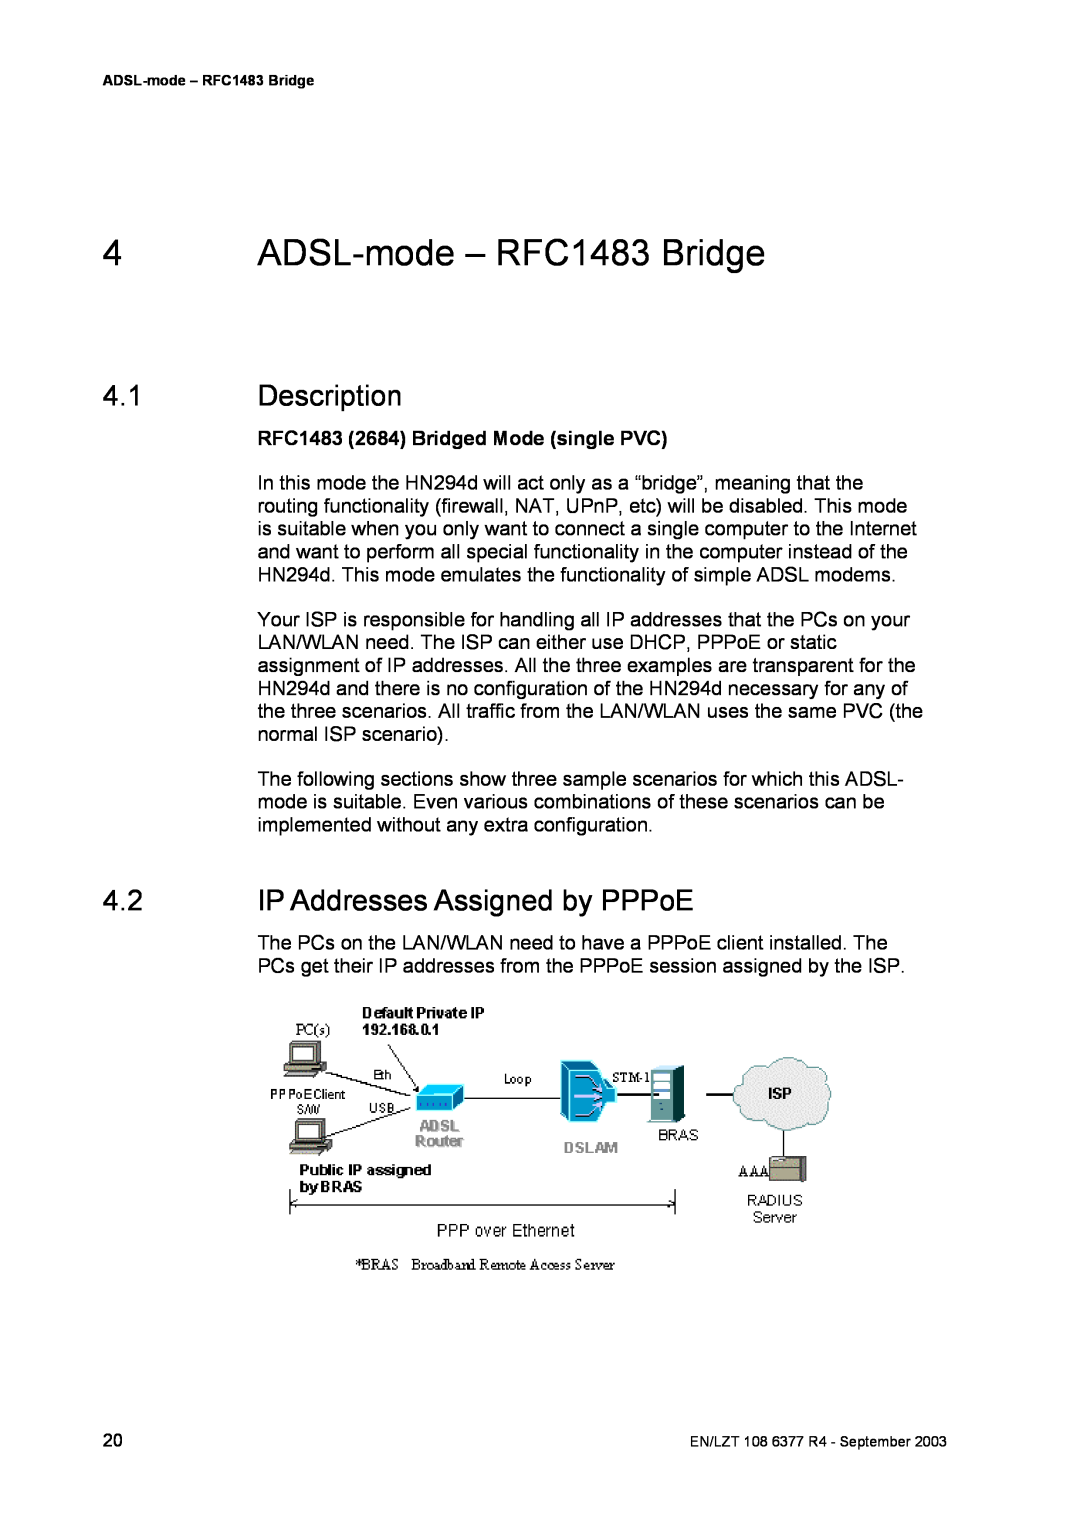 Garmin HN294DP/DI manual ADSL-mode - RFC1483 Bridge, Description, IP Addresses Assigned by PPPoE 